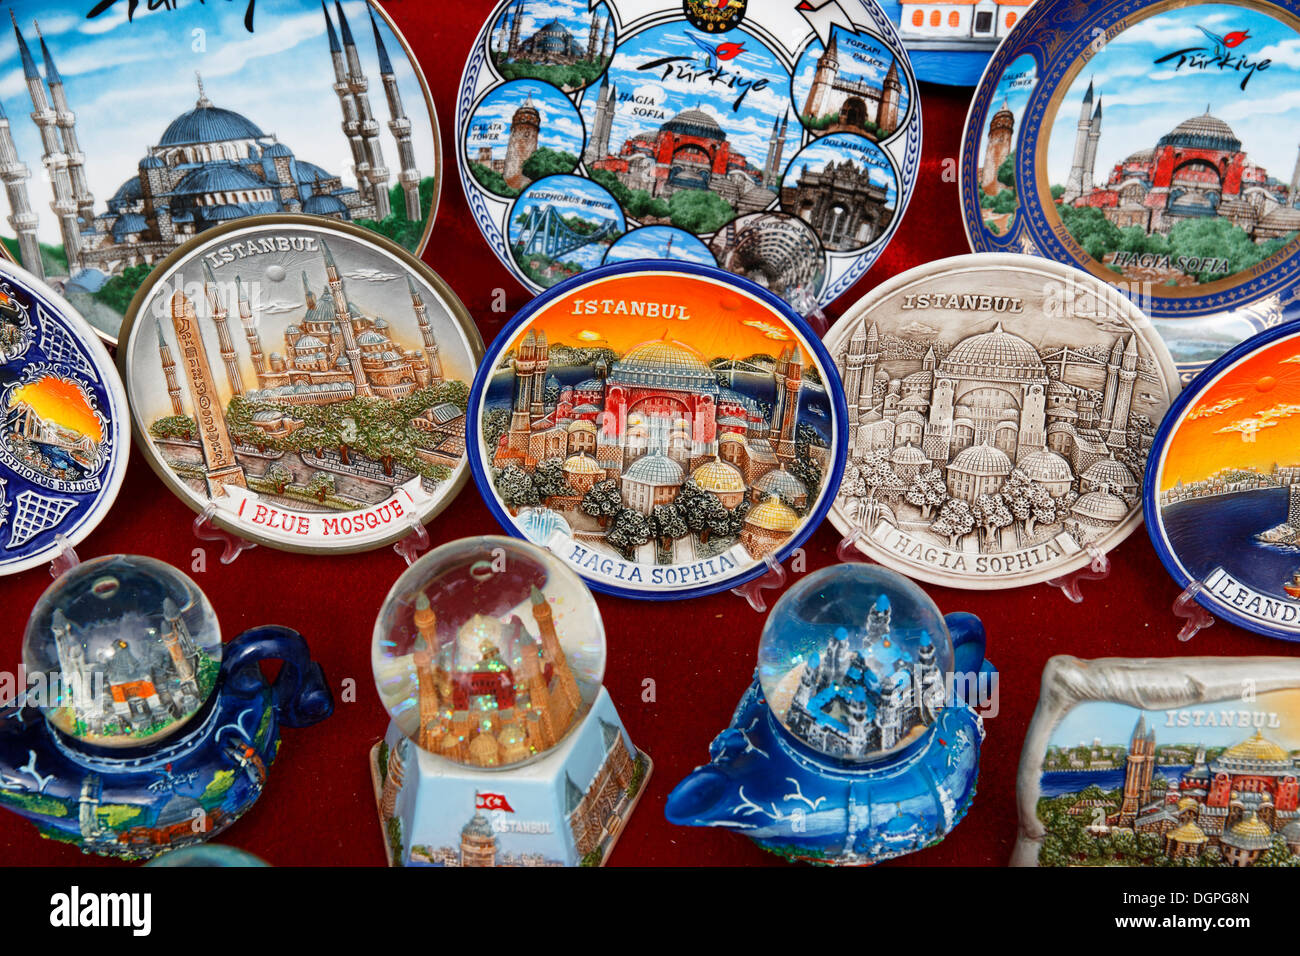 Souvenir stall in the street, Sultanahmet historic district, Istanbul, Turkey, Europe, PublicGround Stock Photo